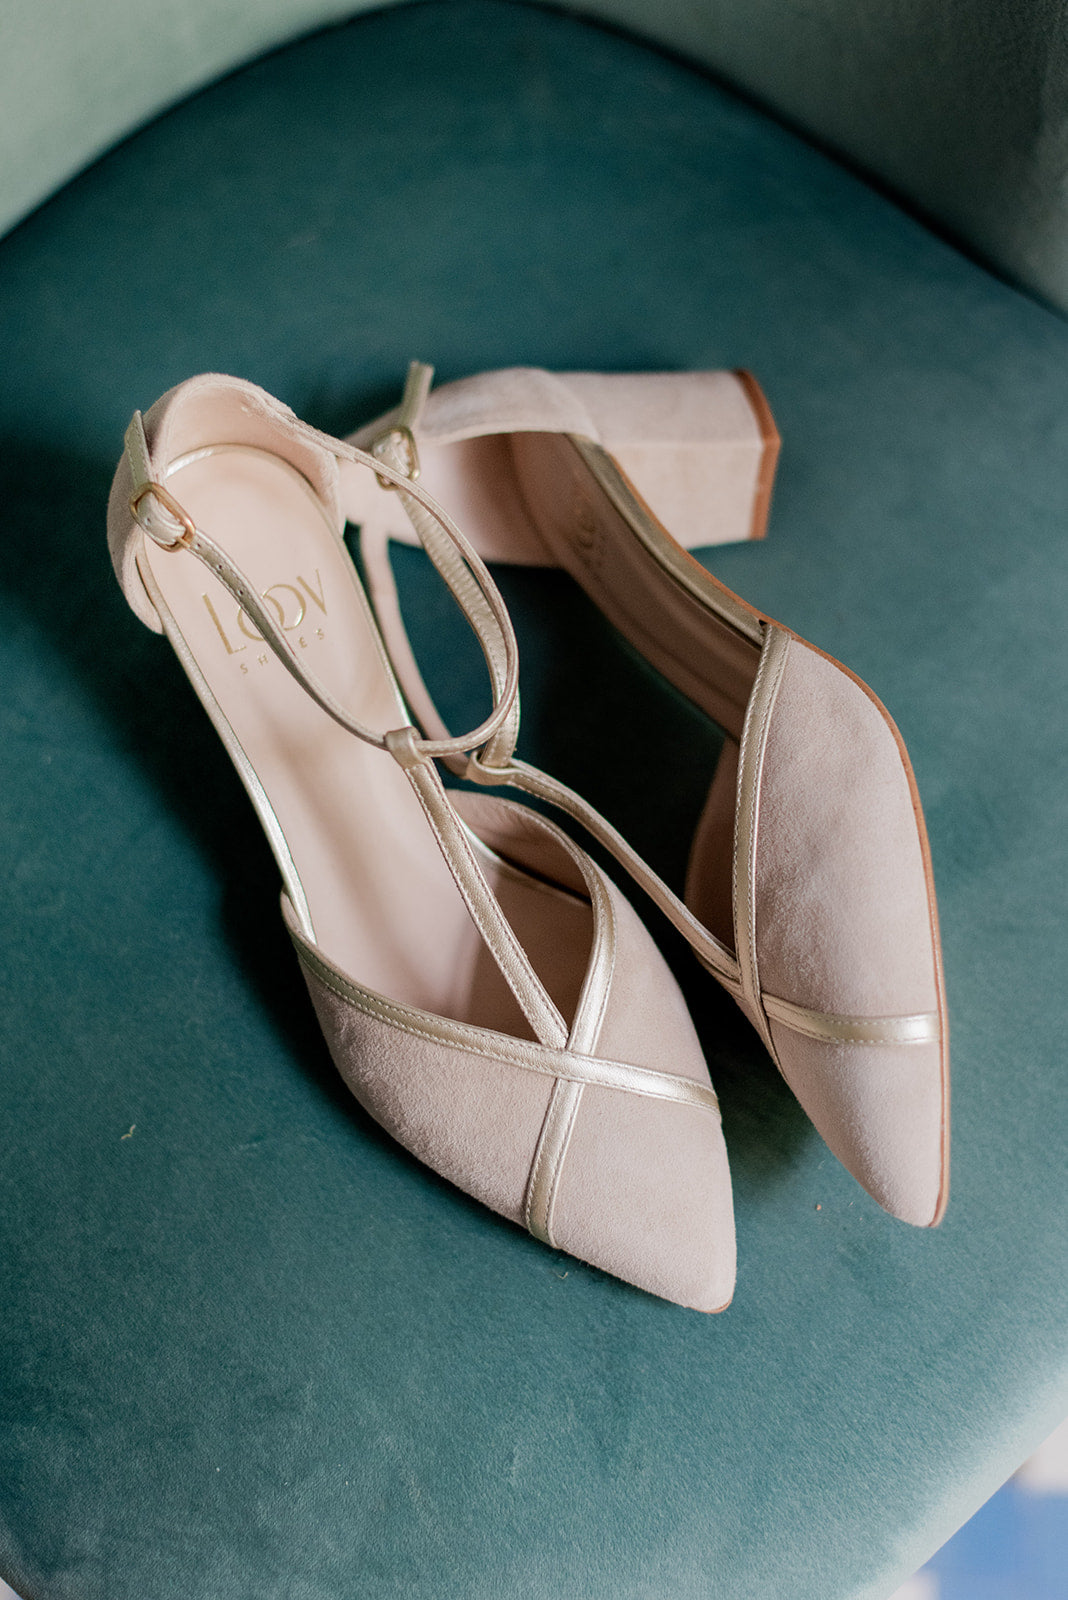 Atenea Beige-tipo salón-ante, atenea, liso, salón, tacón de 4.5, zapatos de color beige, zapatos de color beige oscuro-Loovshoes